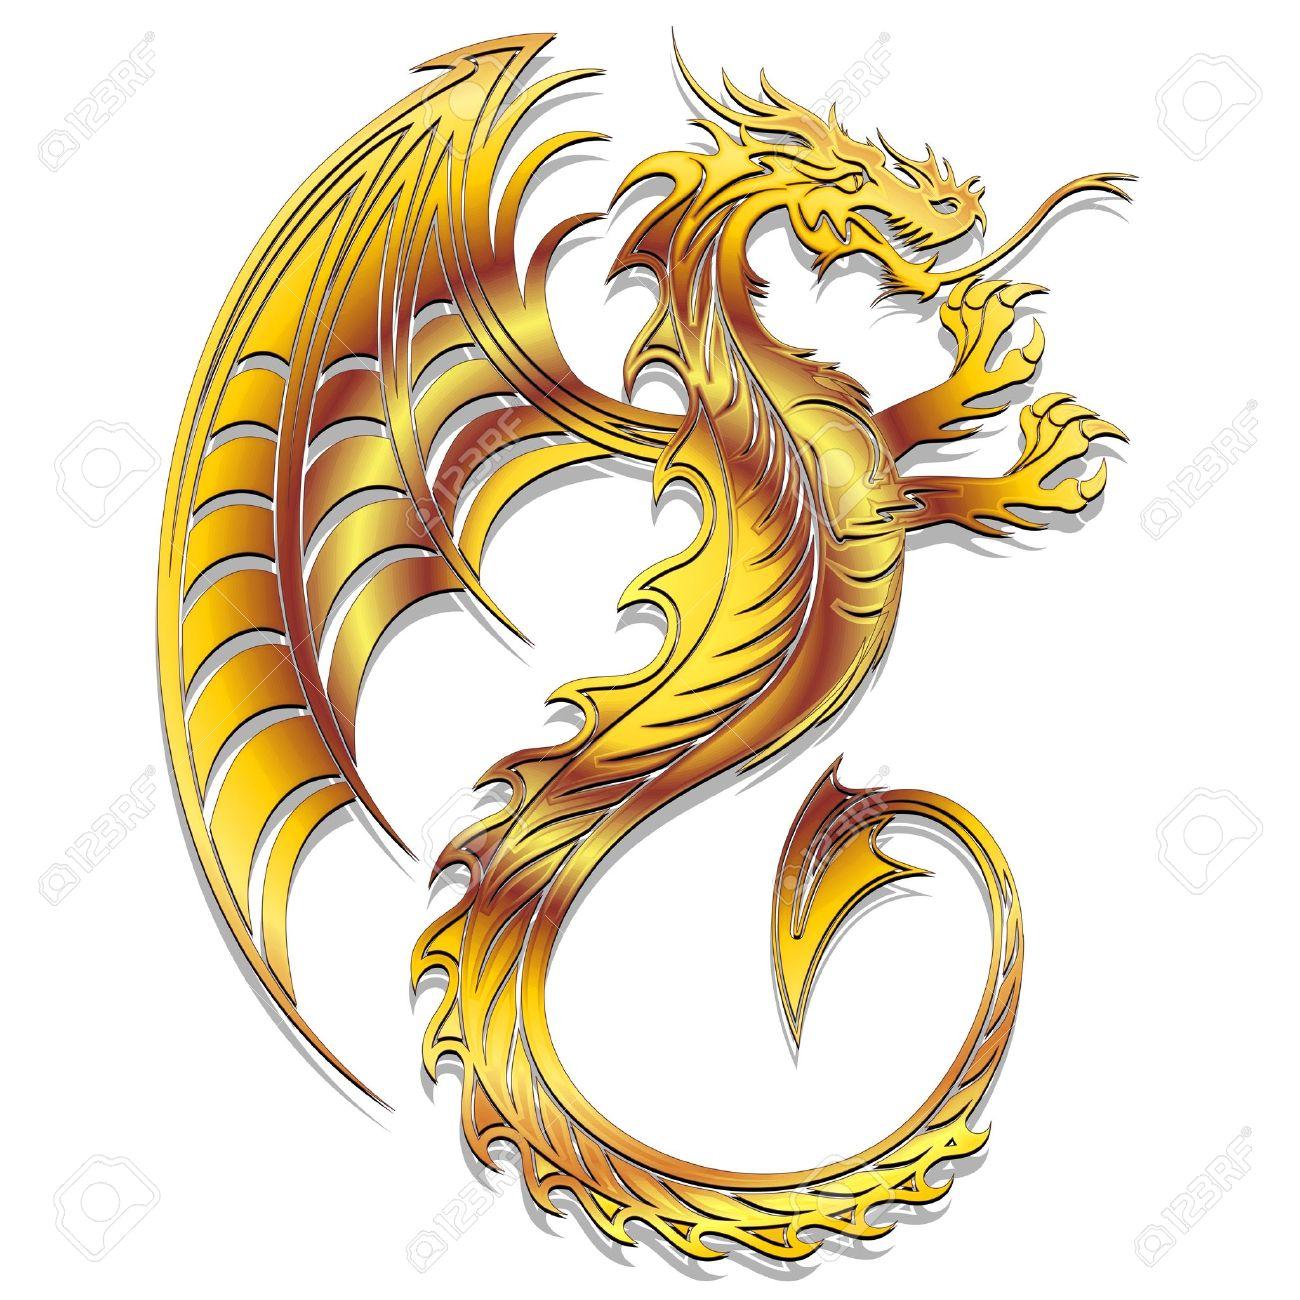 900x1141px Golden Dragon (280.42 KB).02.2015